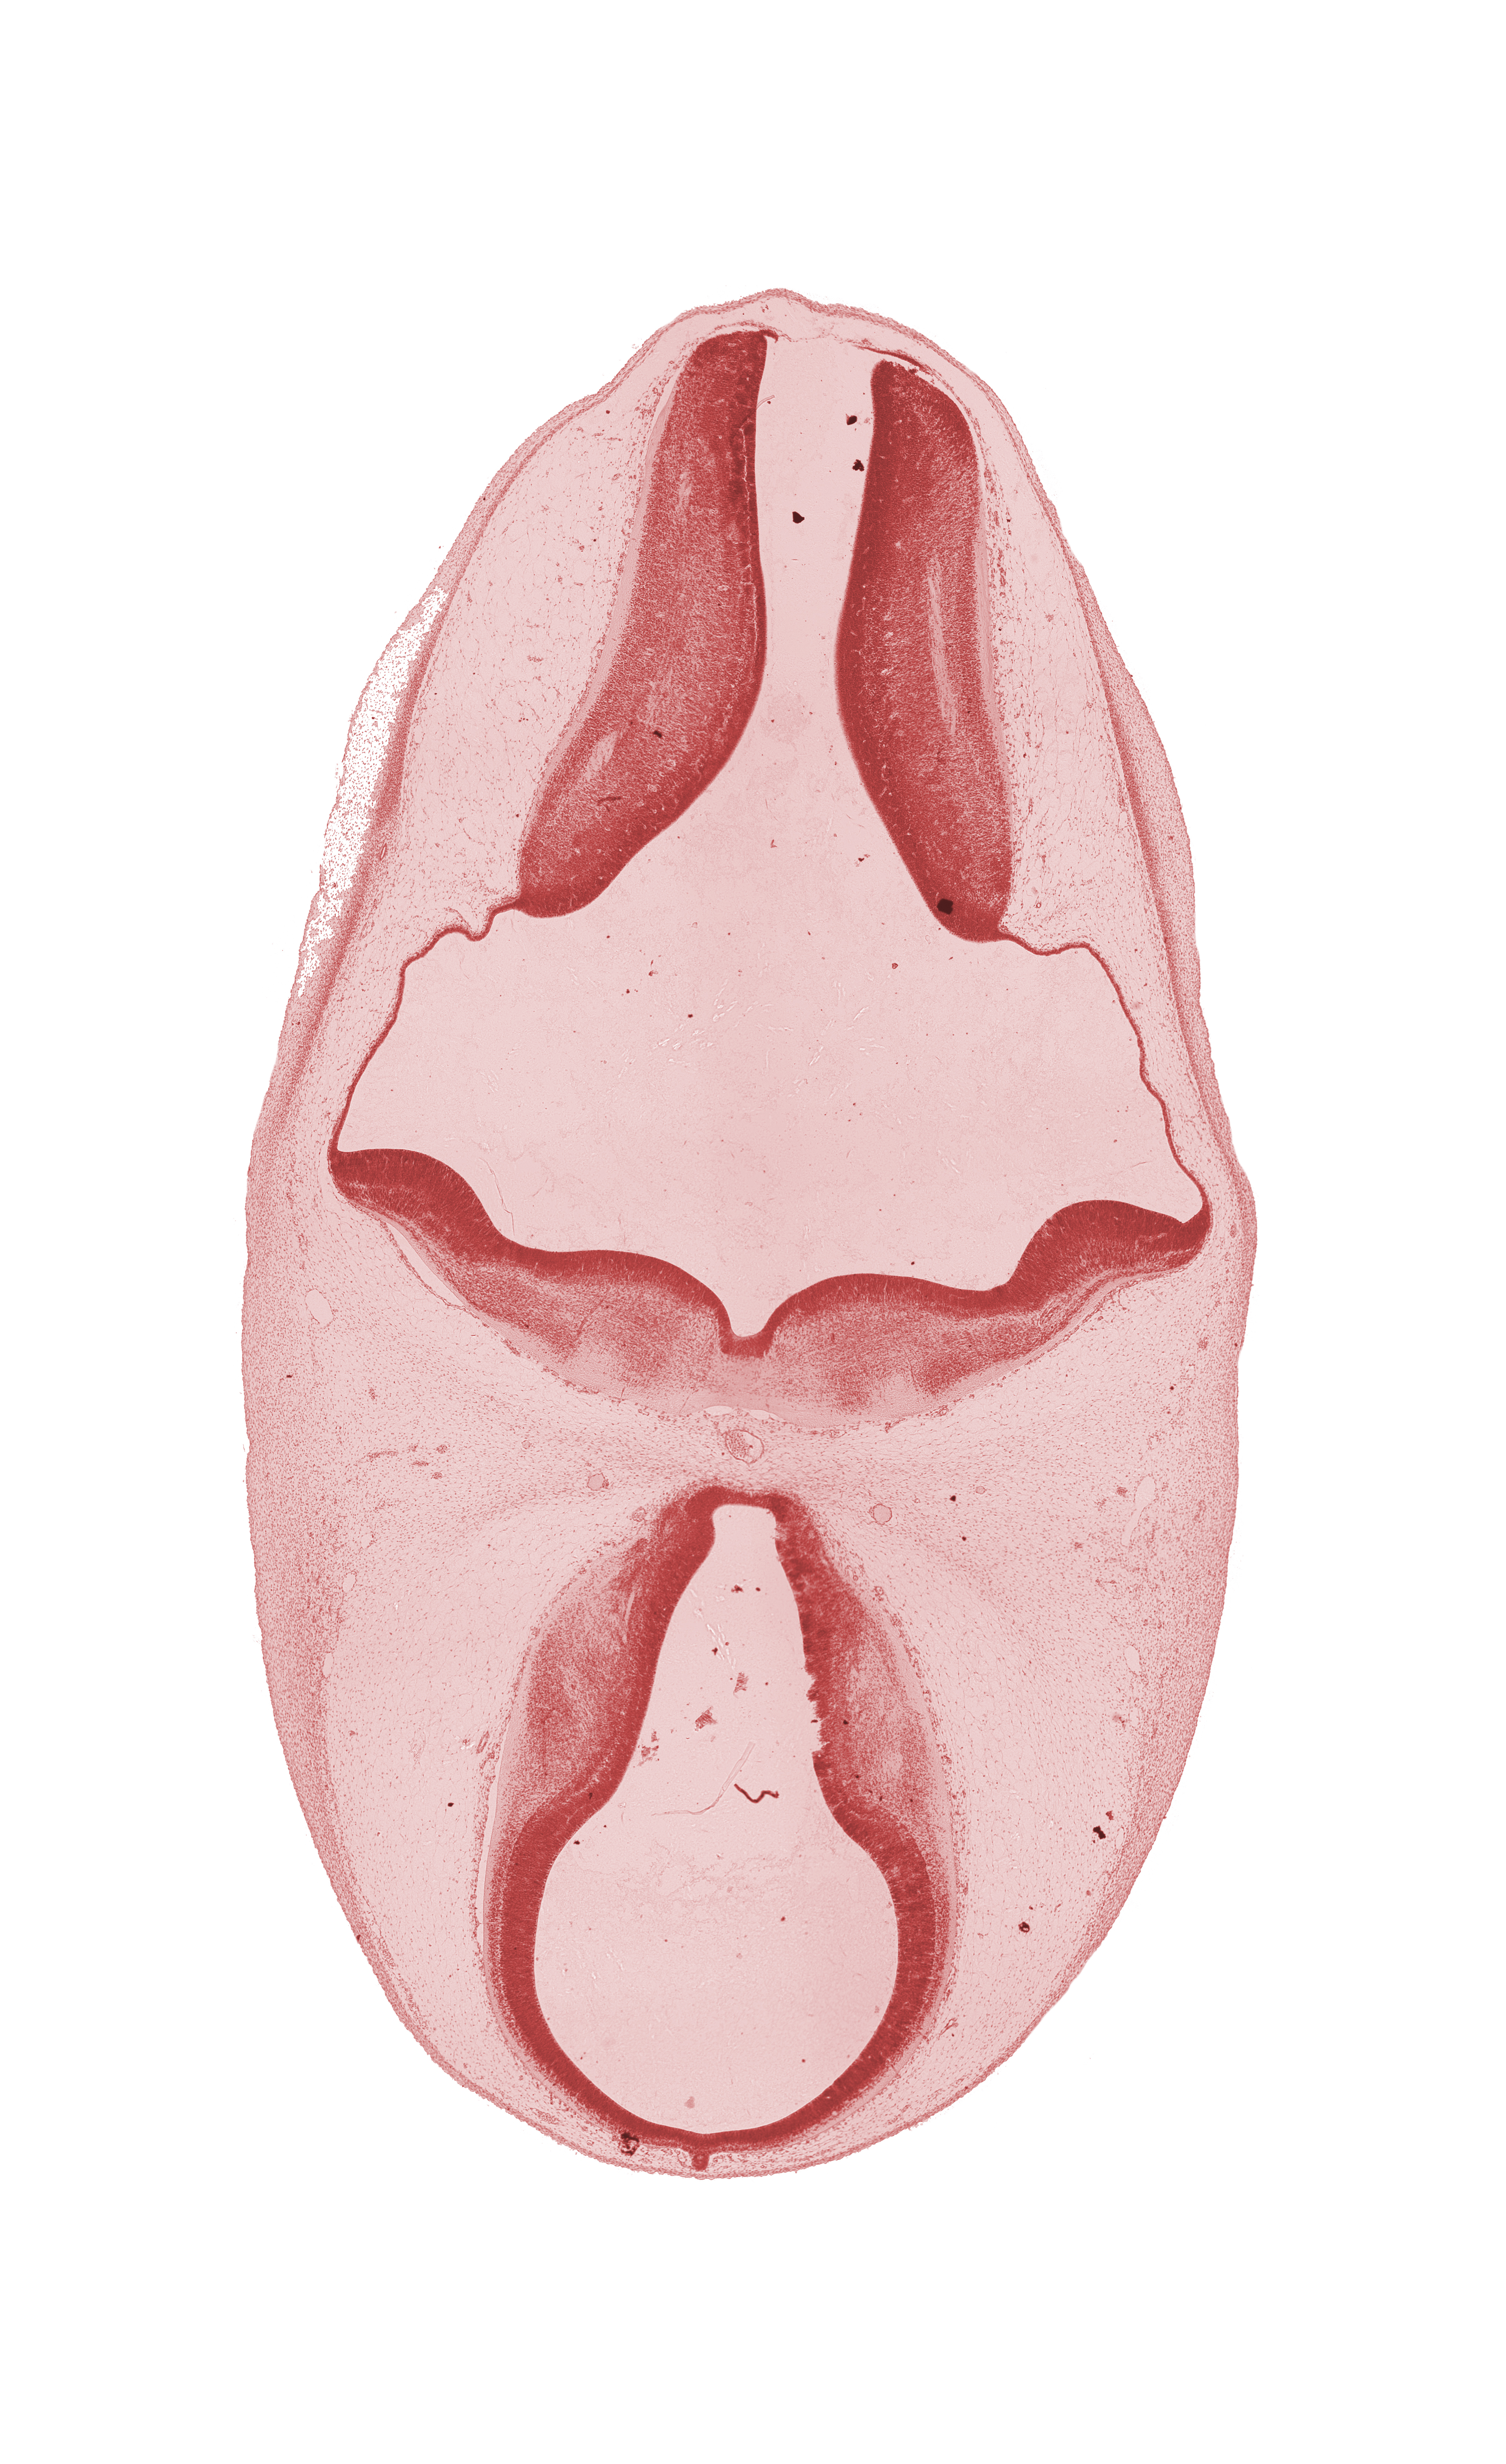 alar plate of myelencephalon, basilar artery, diencephalon, dorsal sulcus, dorsal thalamus, epithalamus, head mesenchyme, marginal ridge, median sulcus, oculomotor nerve (CN III), osteogenic layer, surface ectoderm, trochlear nerve (CN IV), ventral thalamus